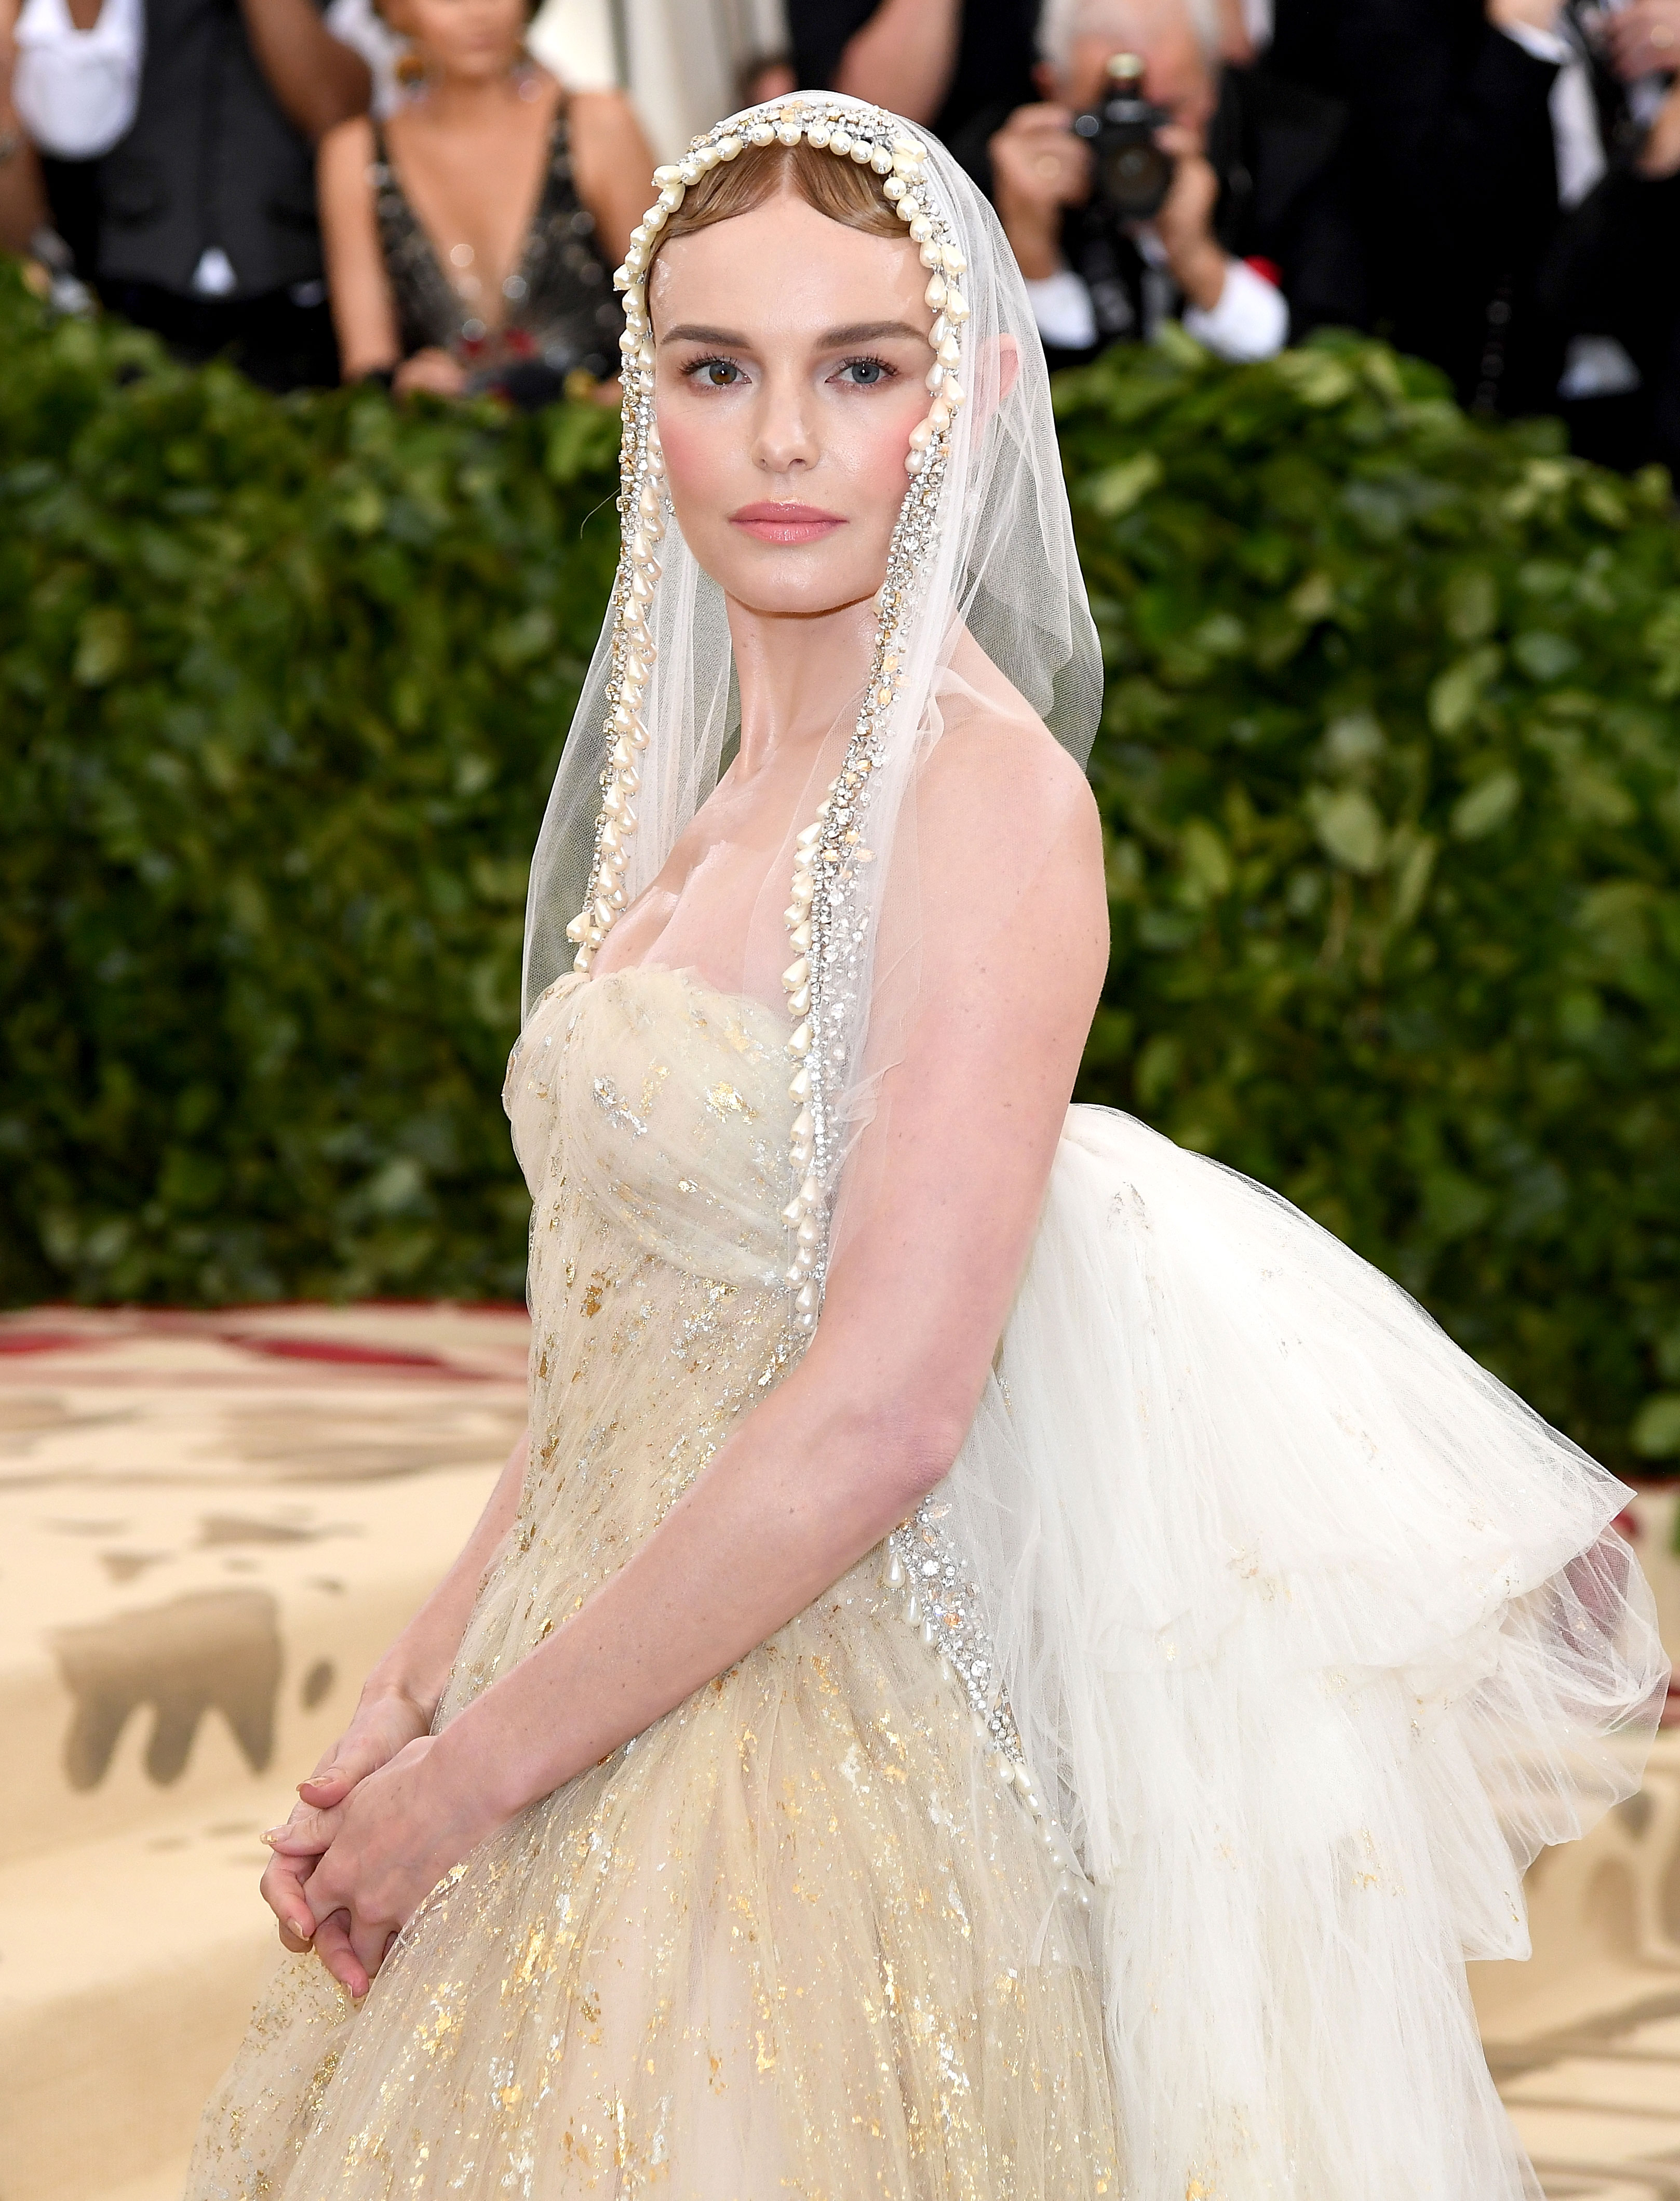 Emma Stone wore wedding dress to Met Gala